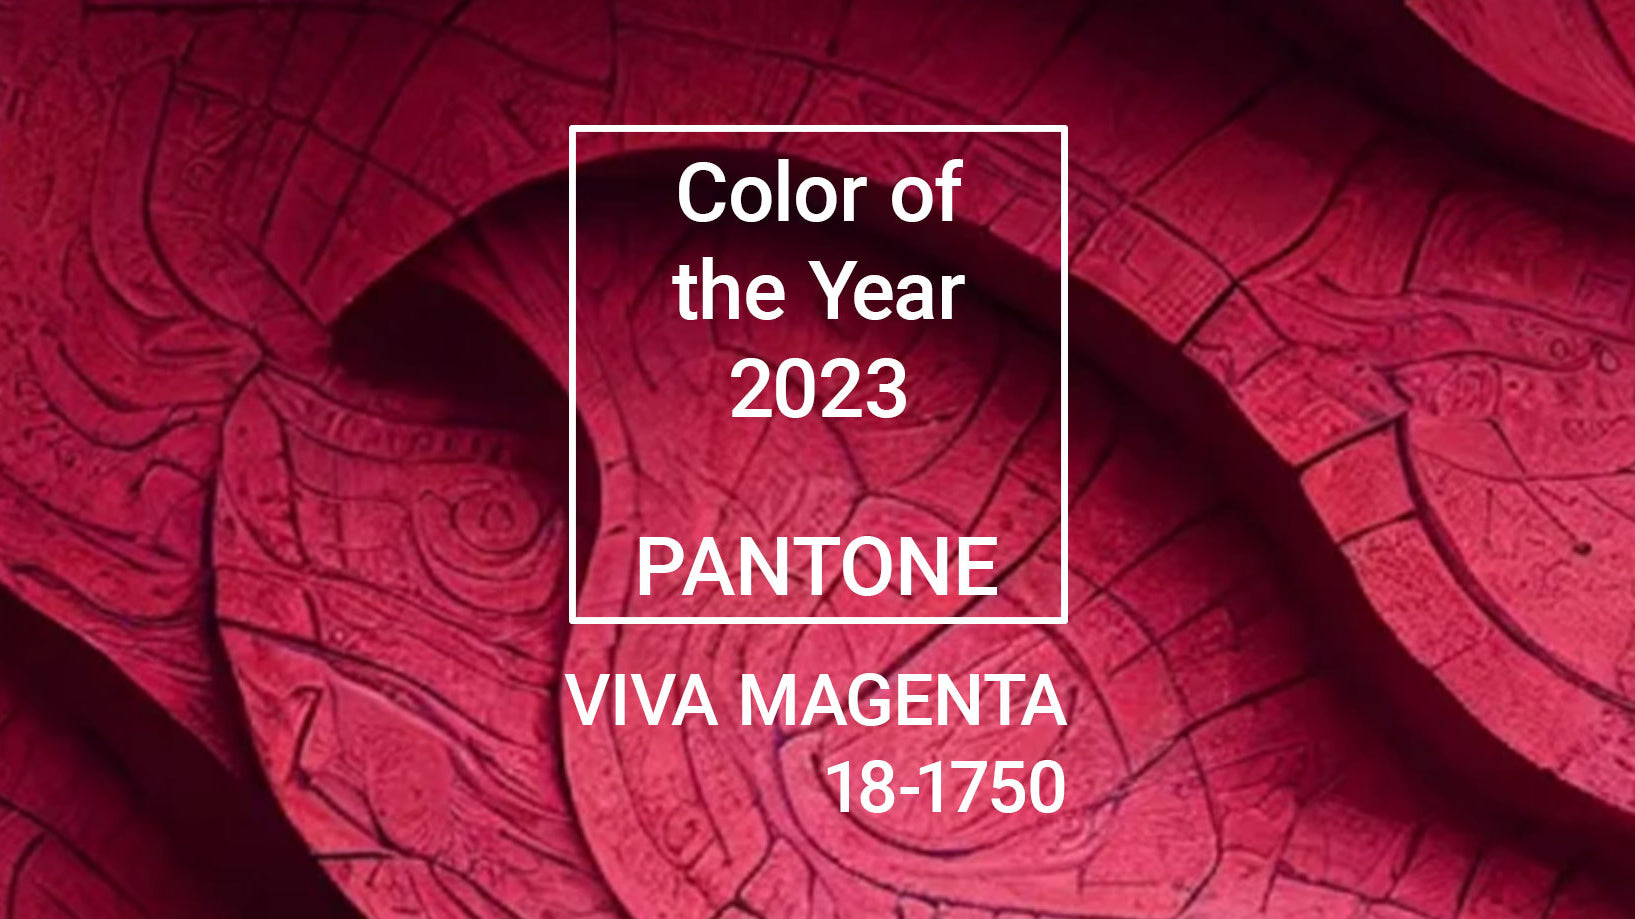 viva magenta pantone color of the year 2023 blog post header